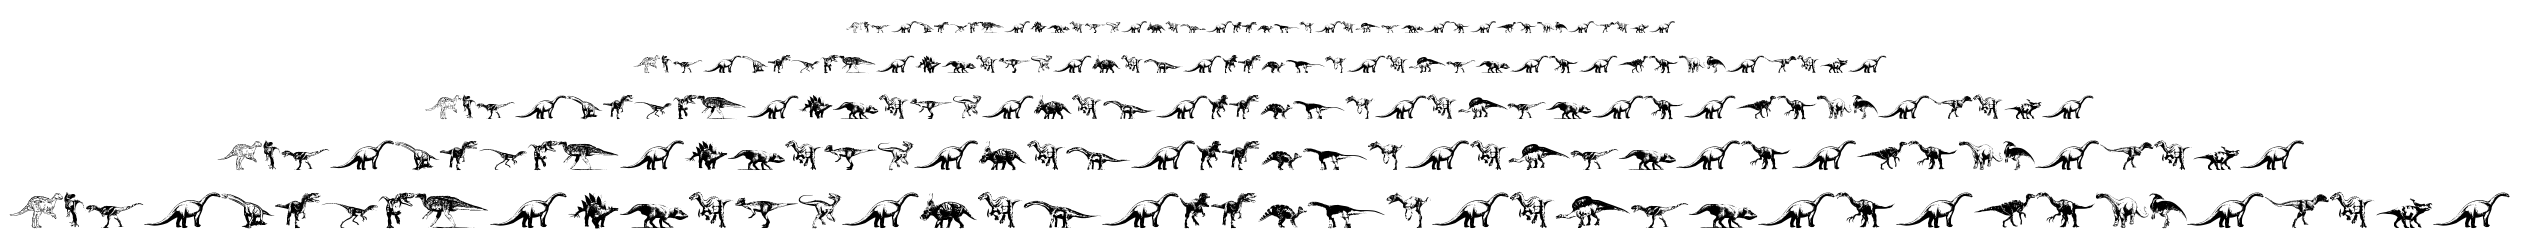 Dinosaurs font